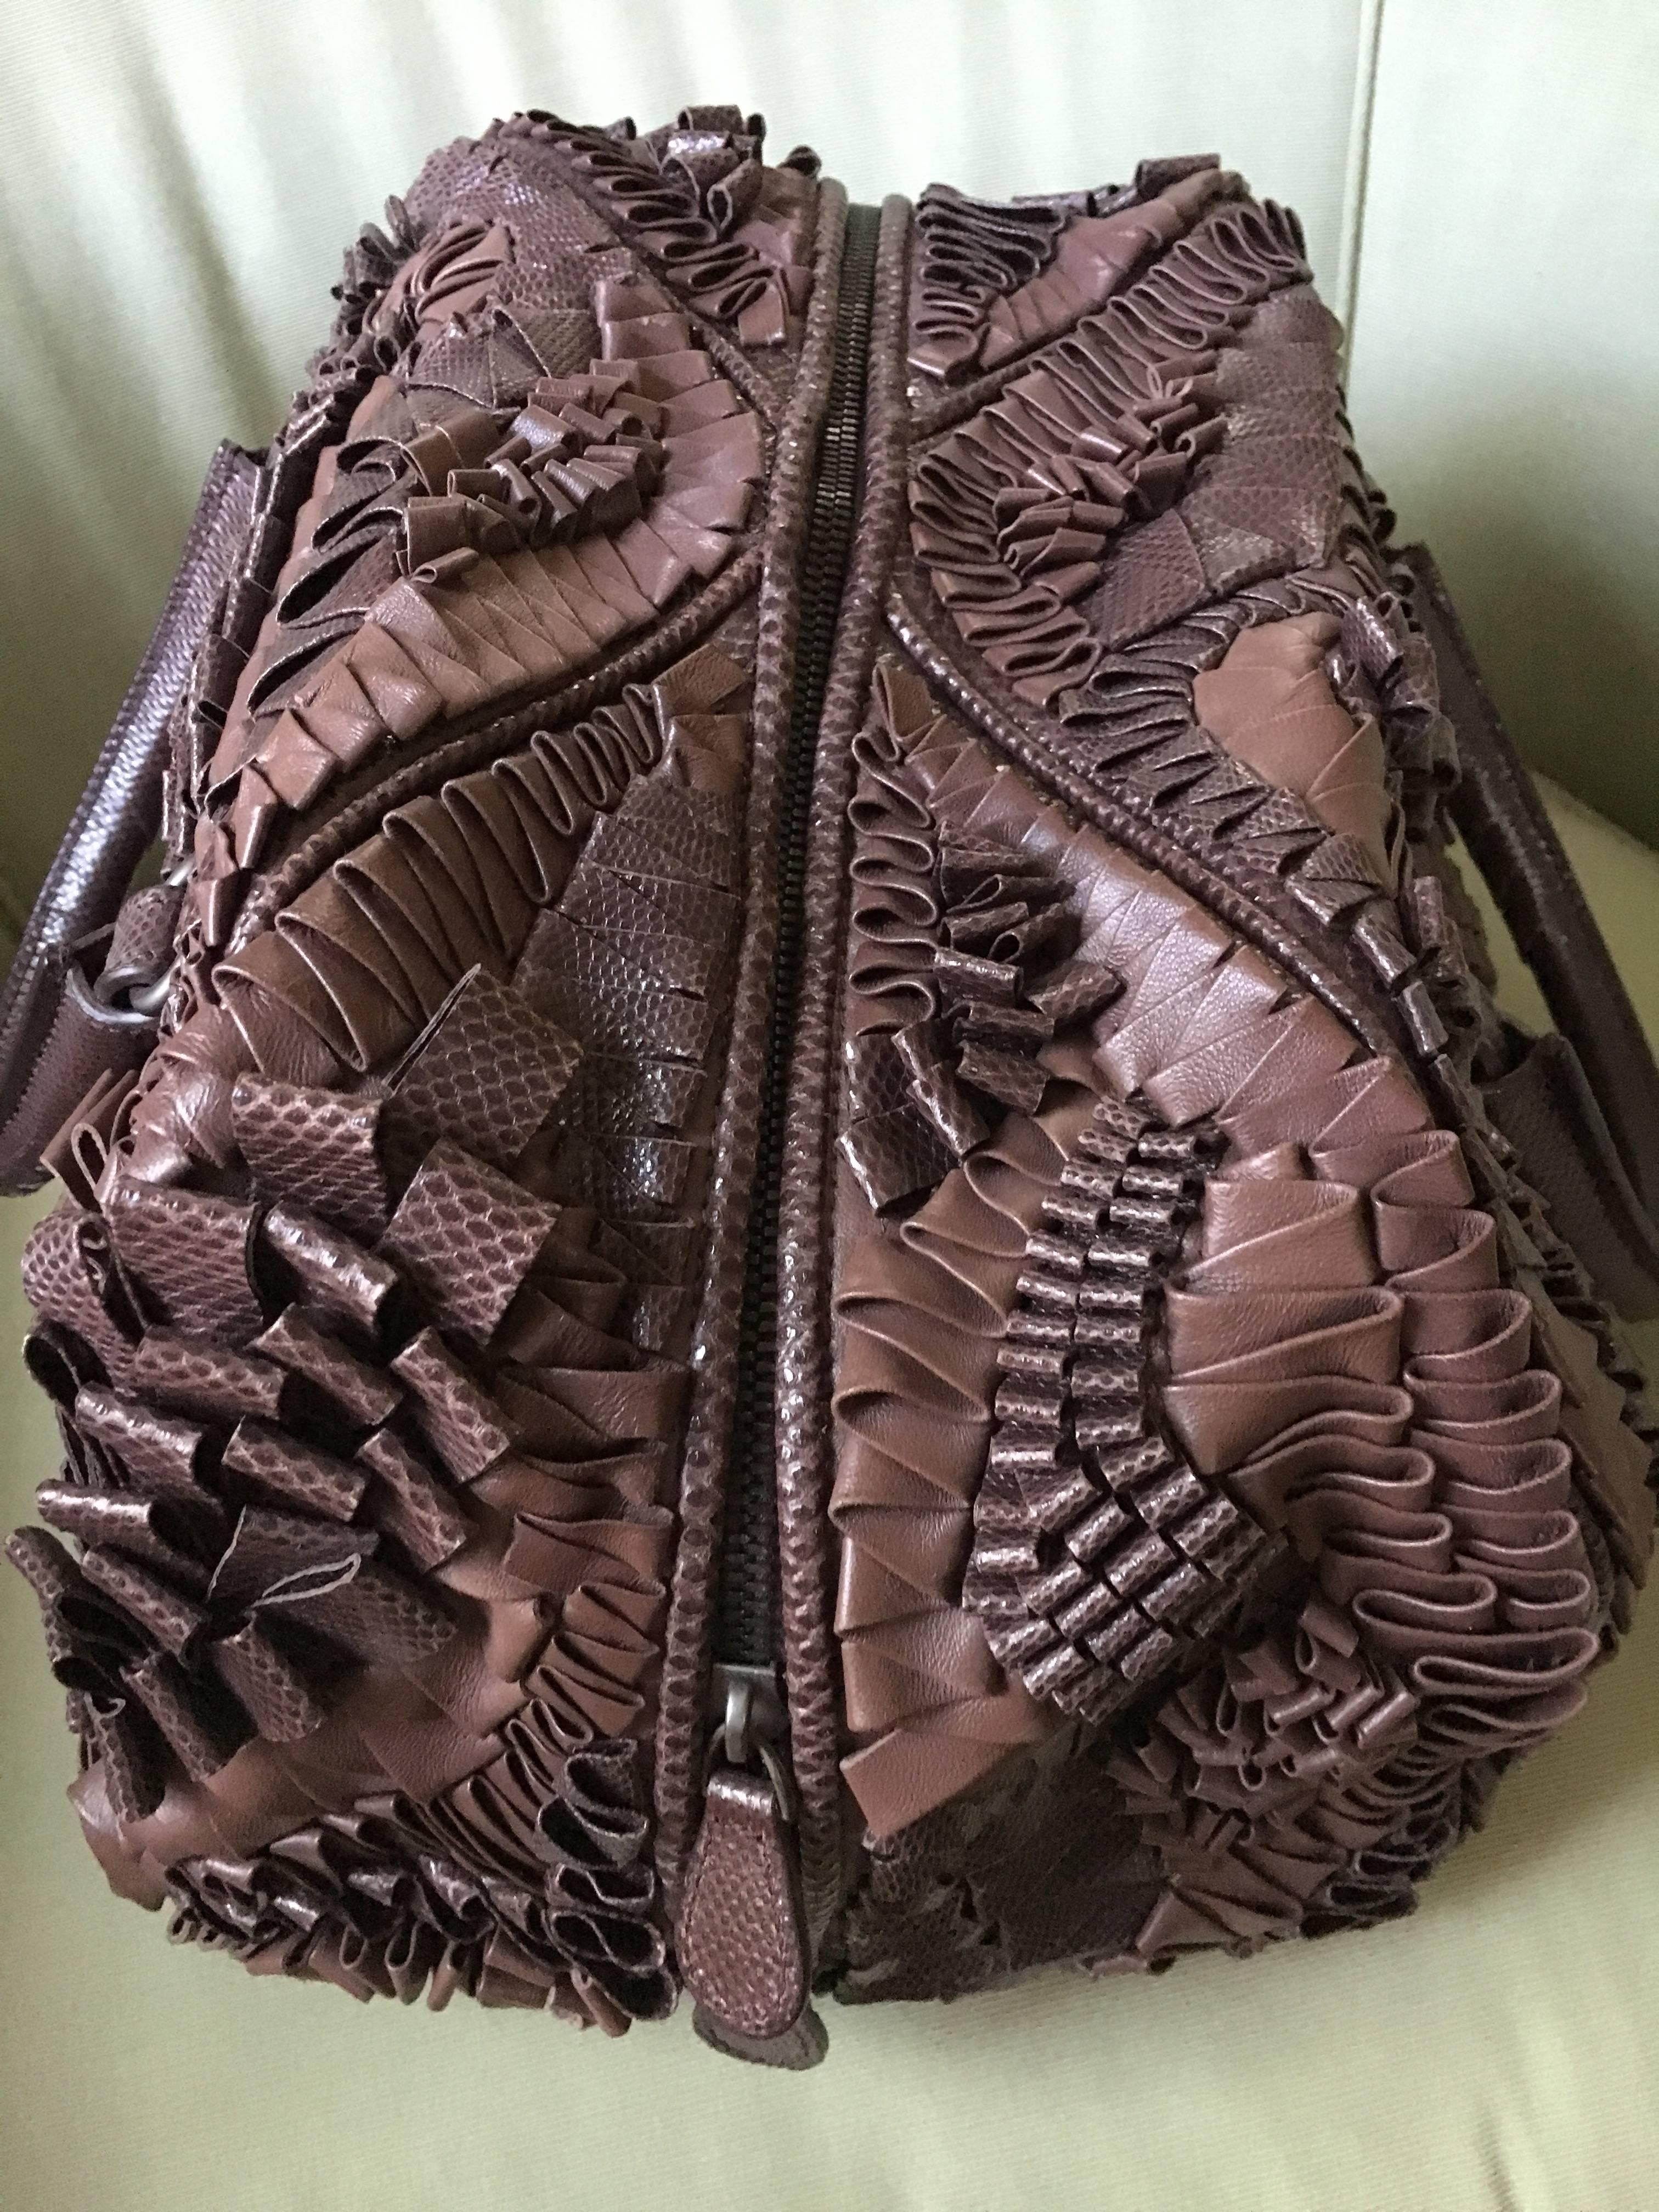 Bottega Veneta Rare Limited Edition Aubergine Woven Leather and Lizard Bag For Sale 2